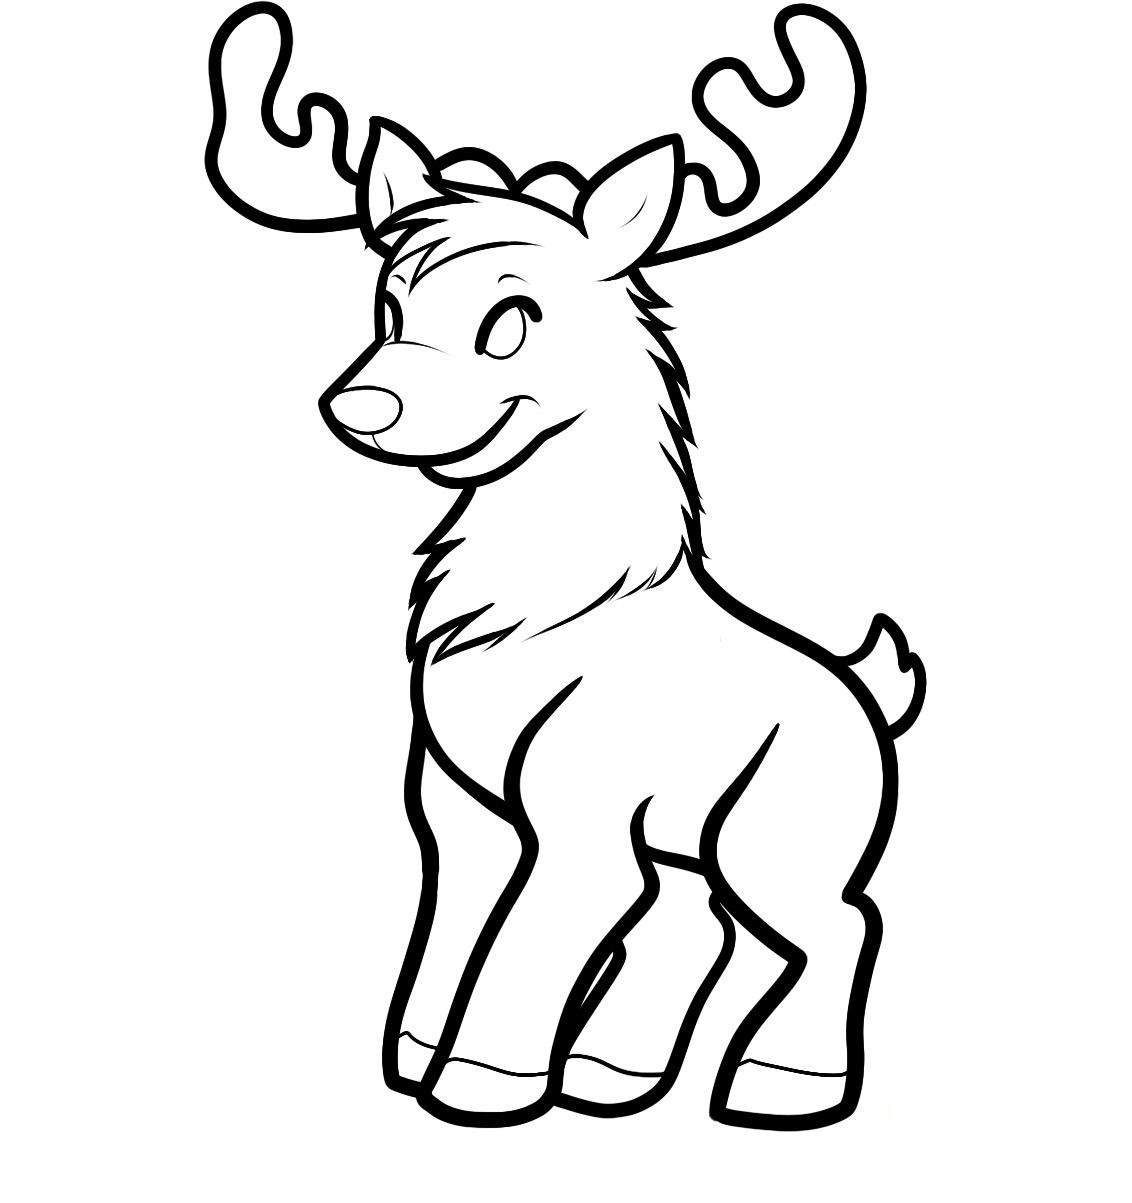 Reindeer Coloring Pages - Kidsuki